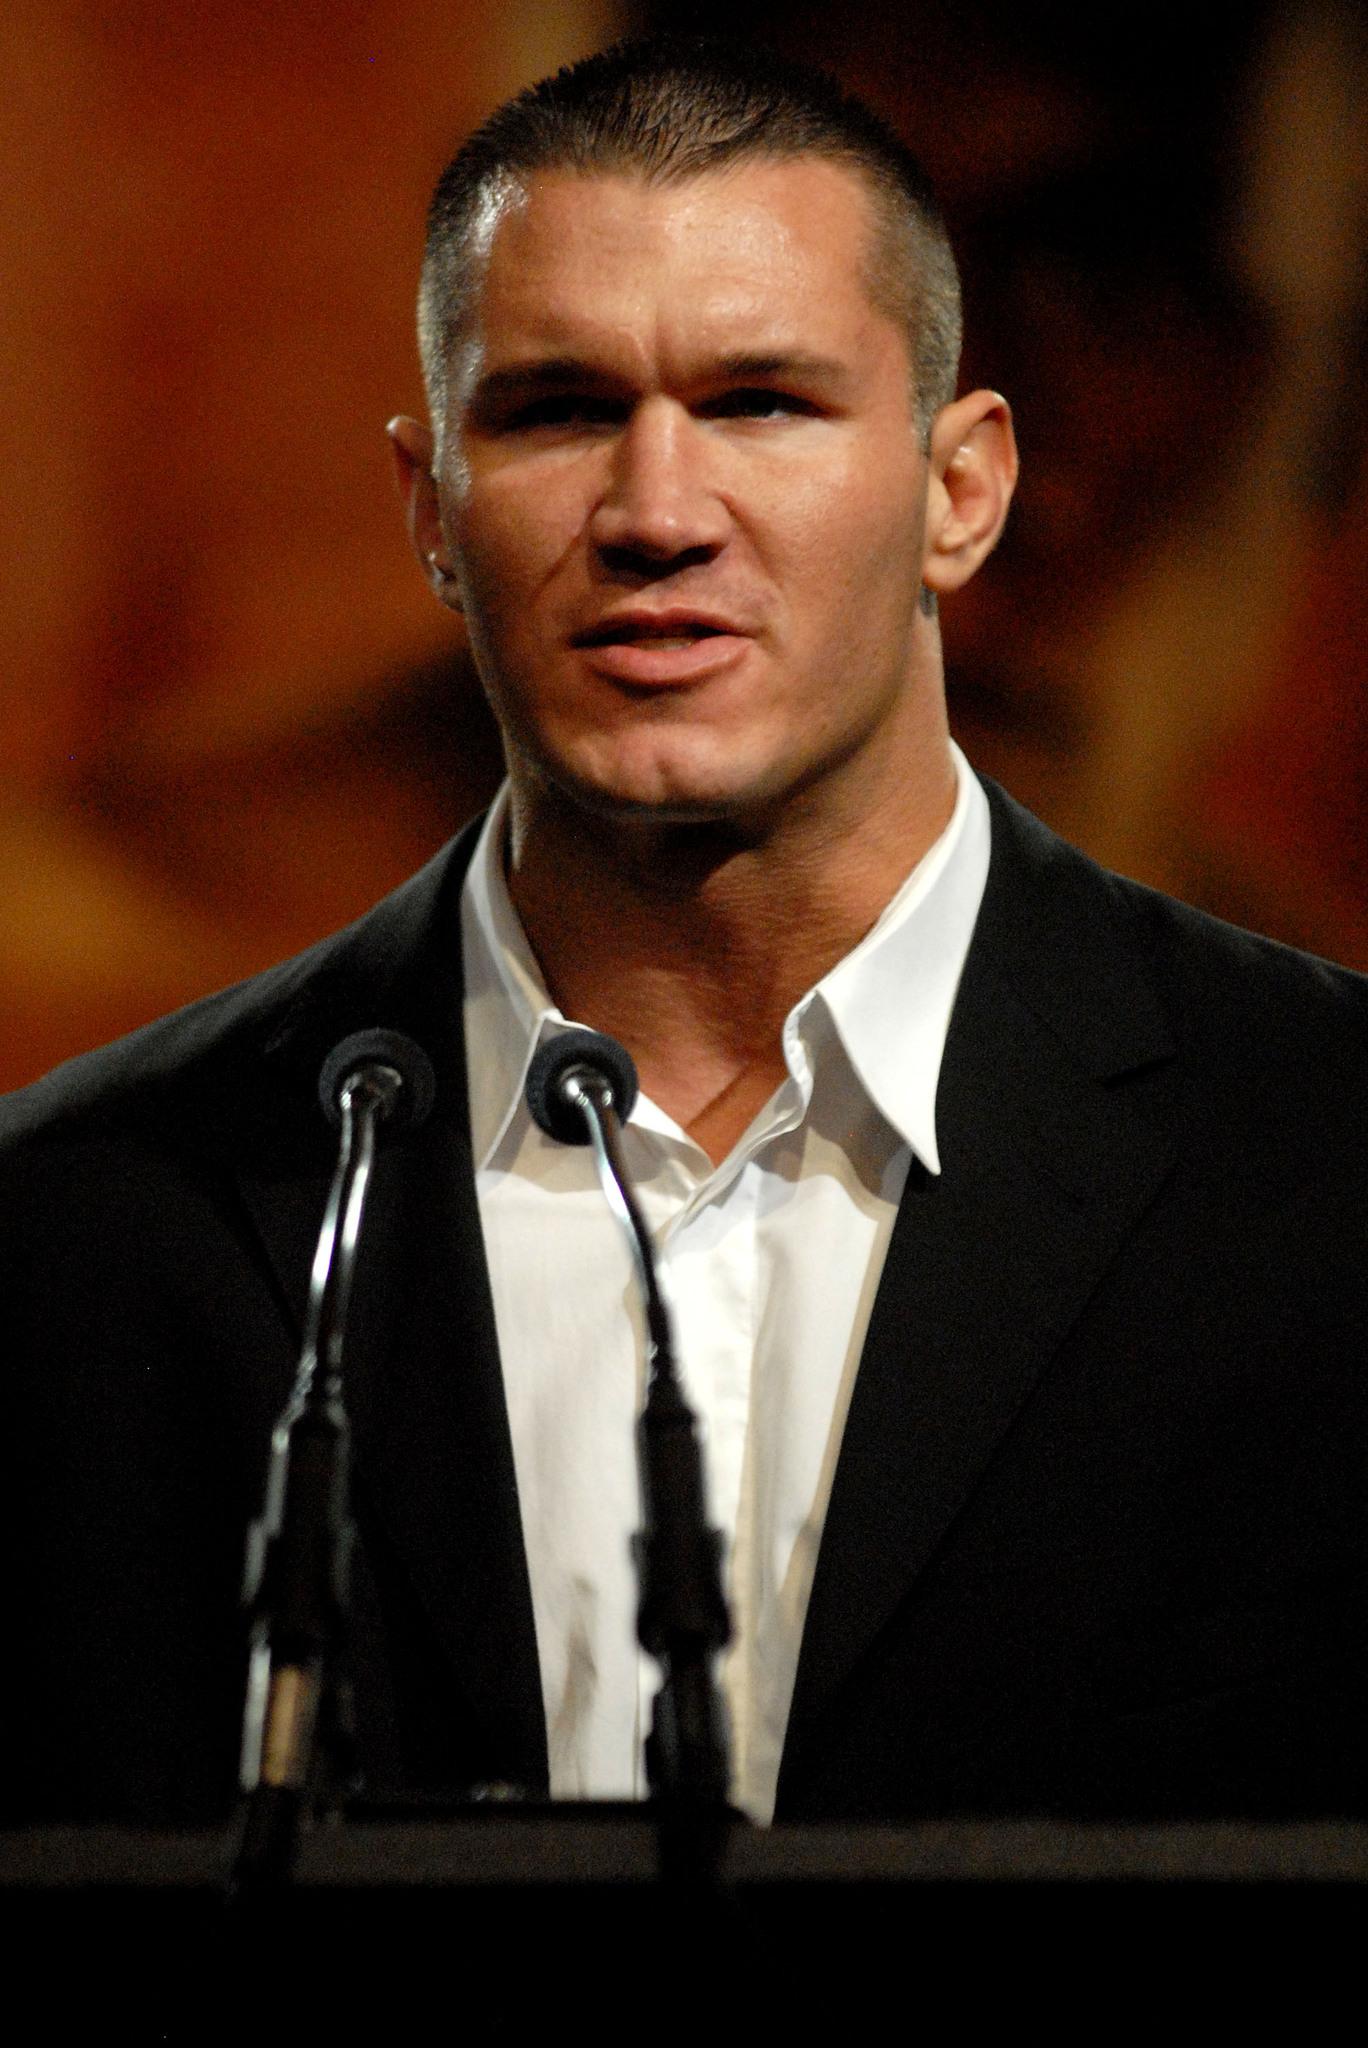 Randy Orton image